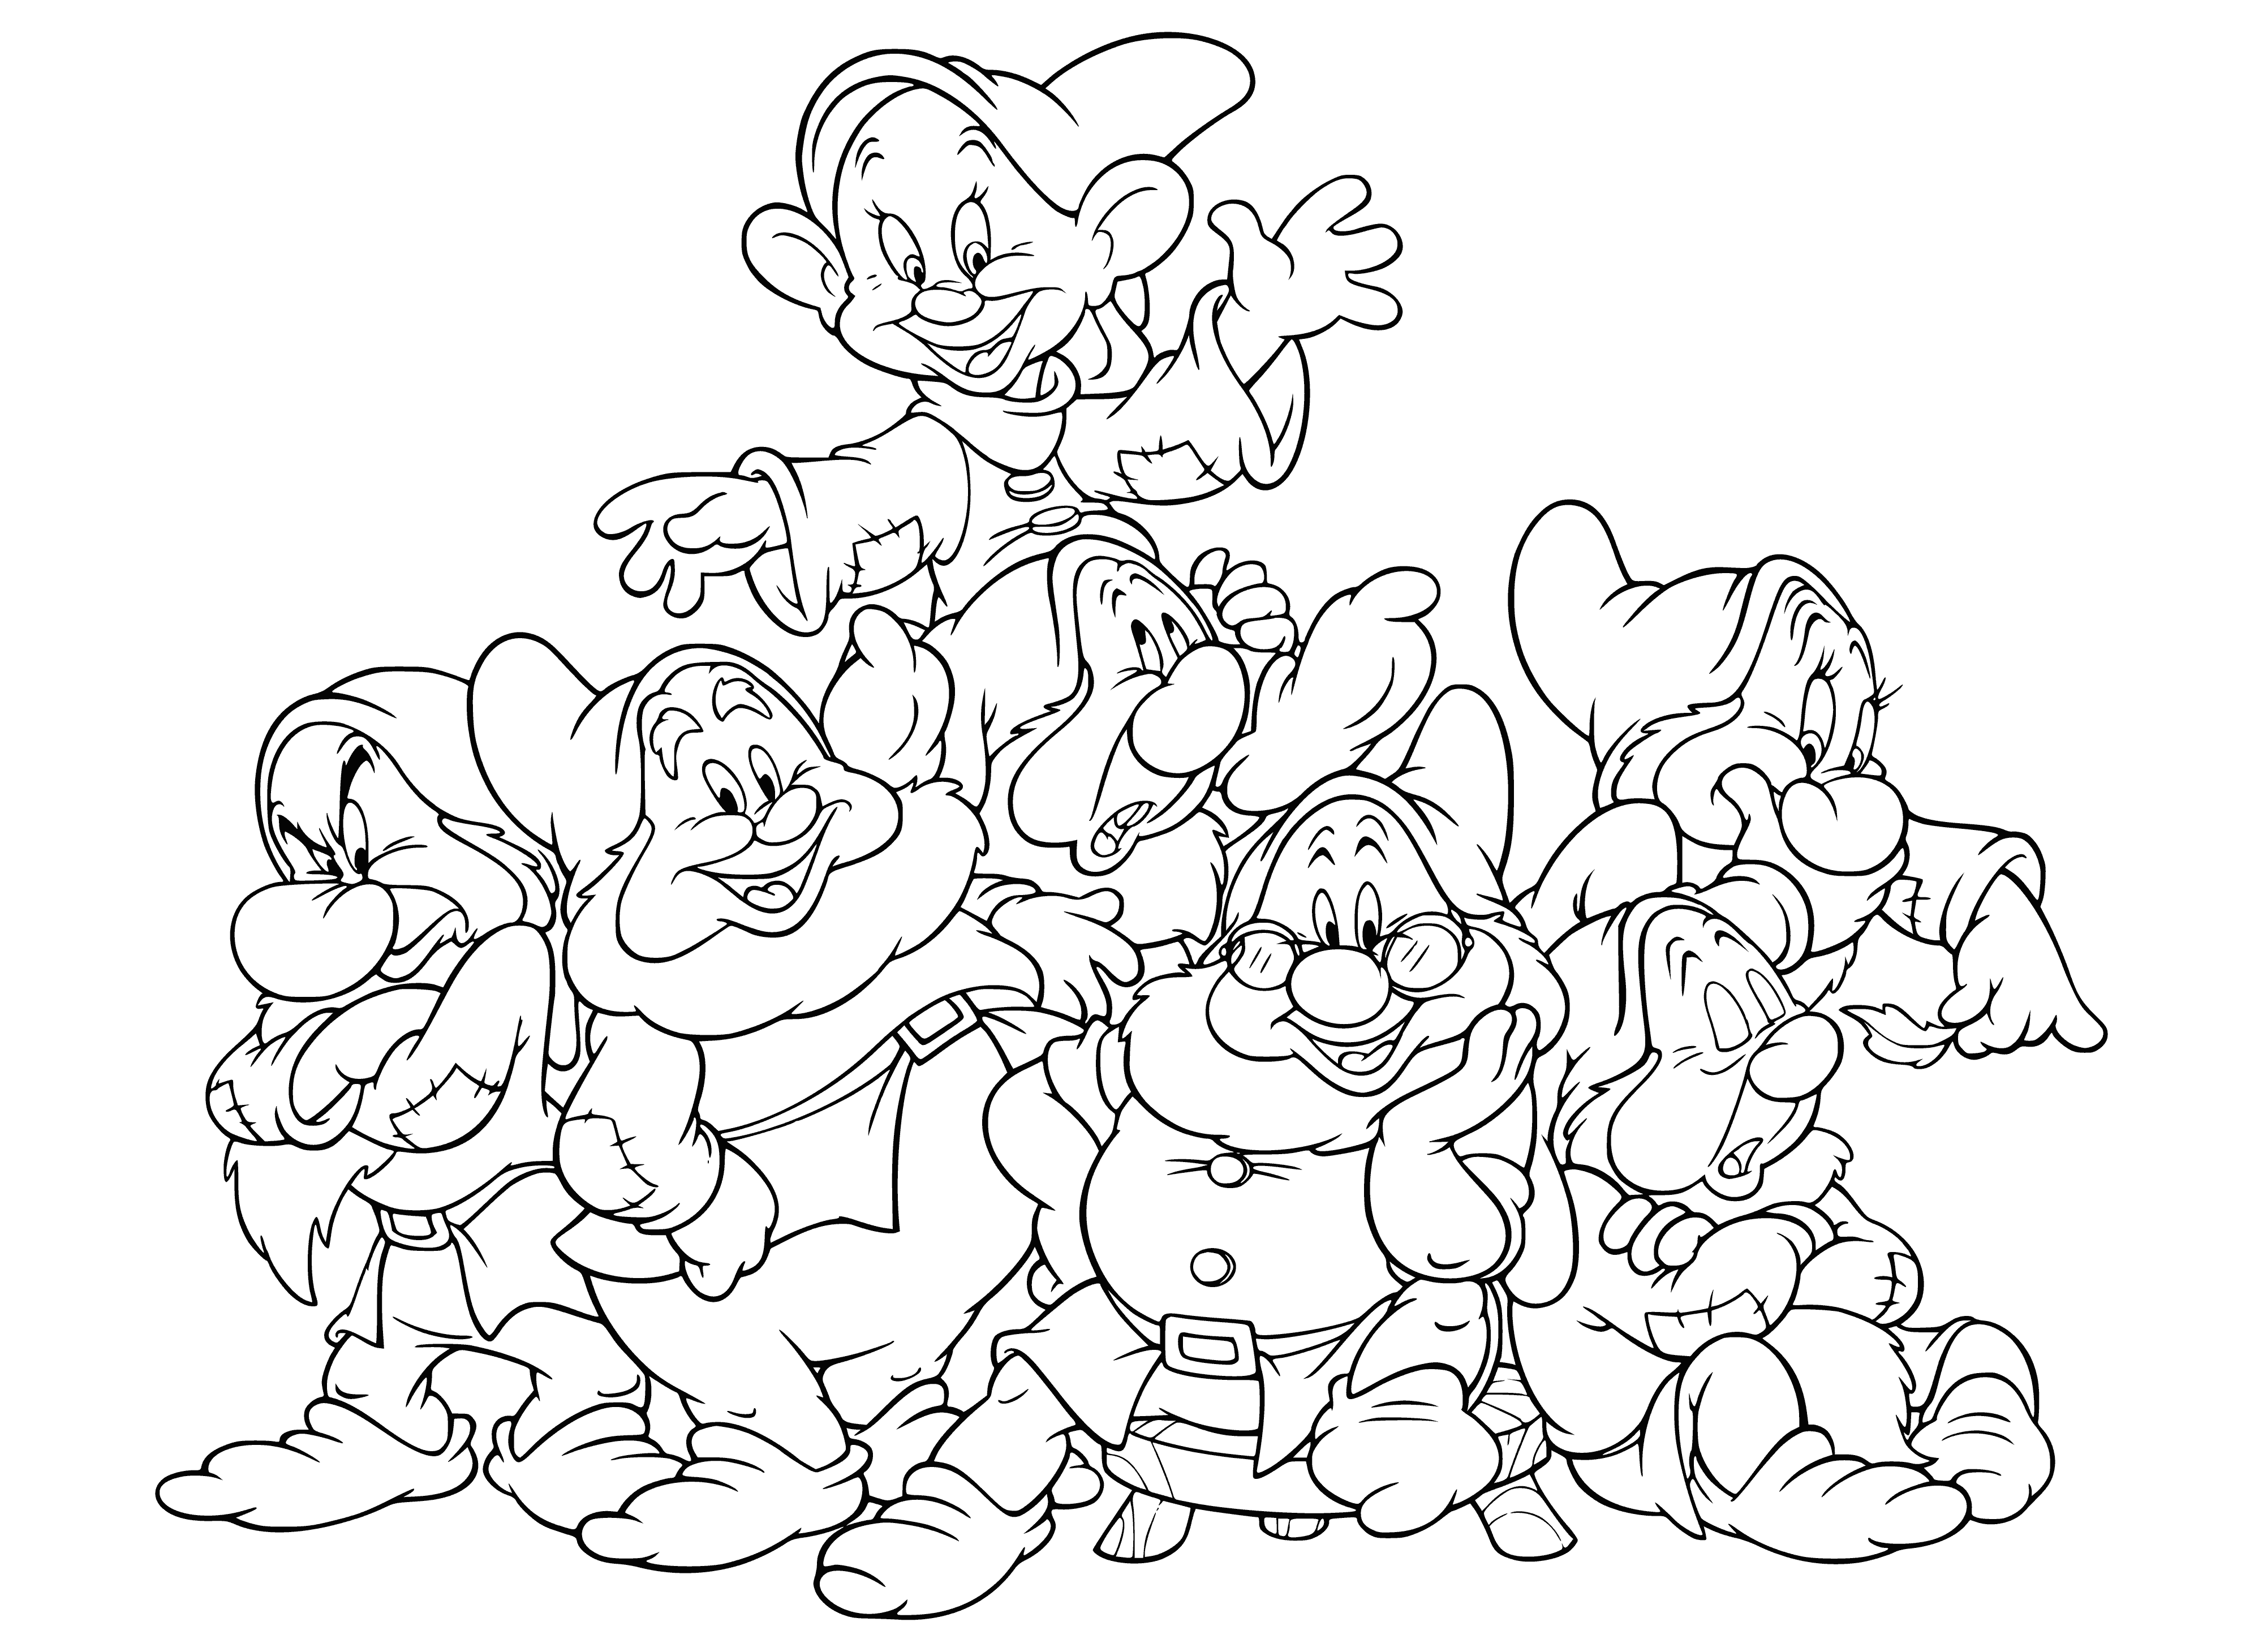 7 dwarfs coloring page